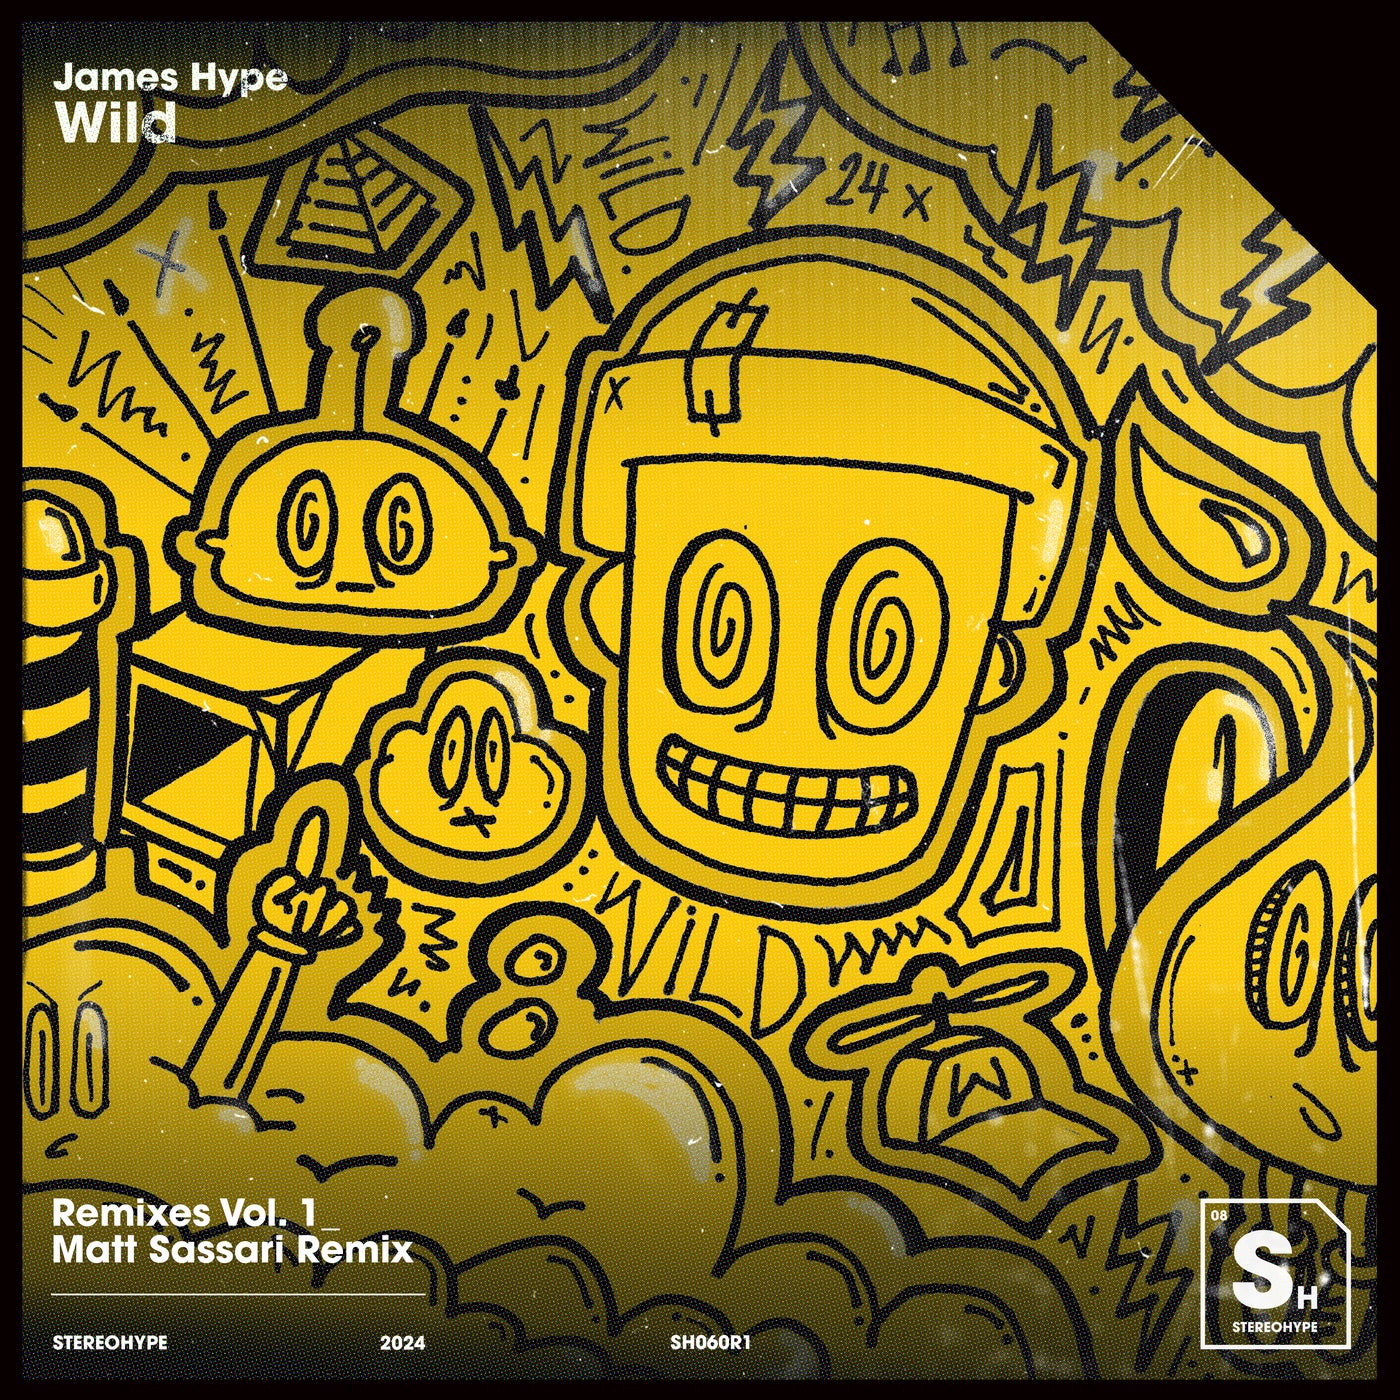 image cover: James Hype - Wild (Matt Sassari Extended Remix) on STEREOHYPE